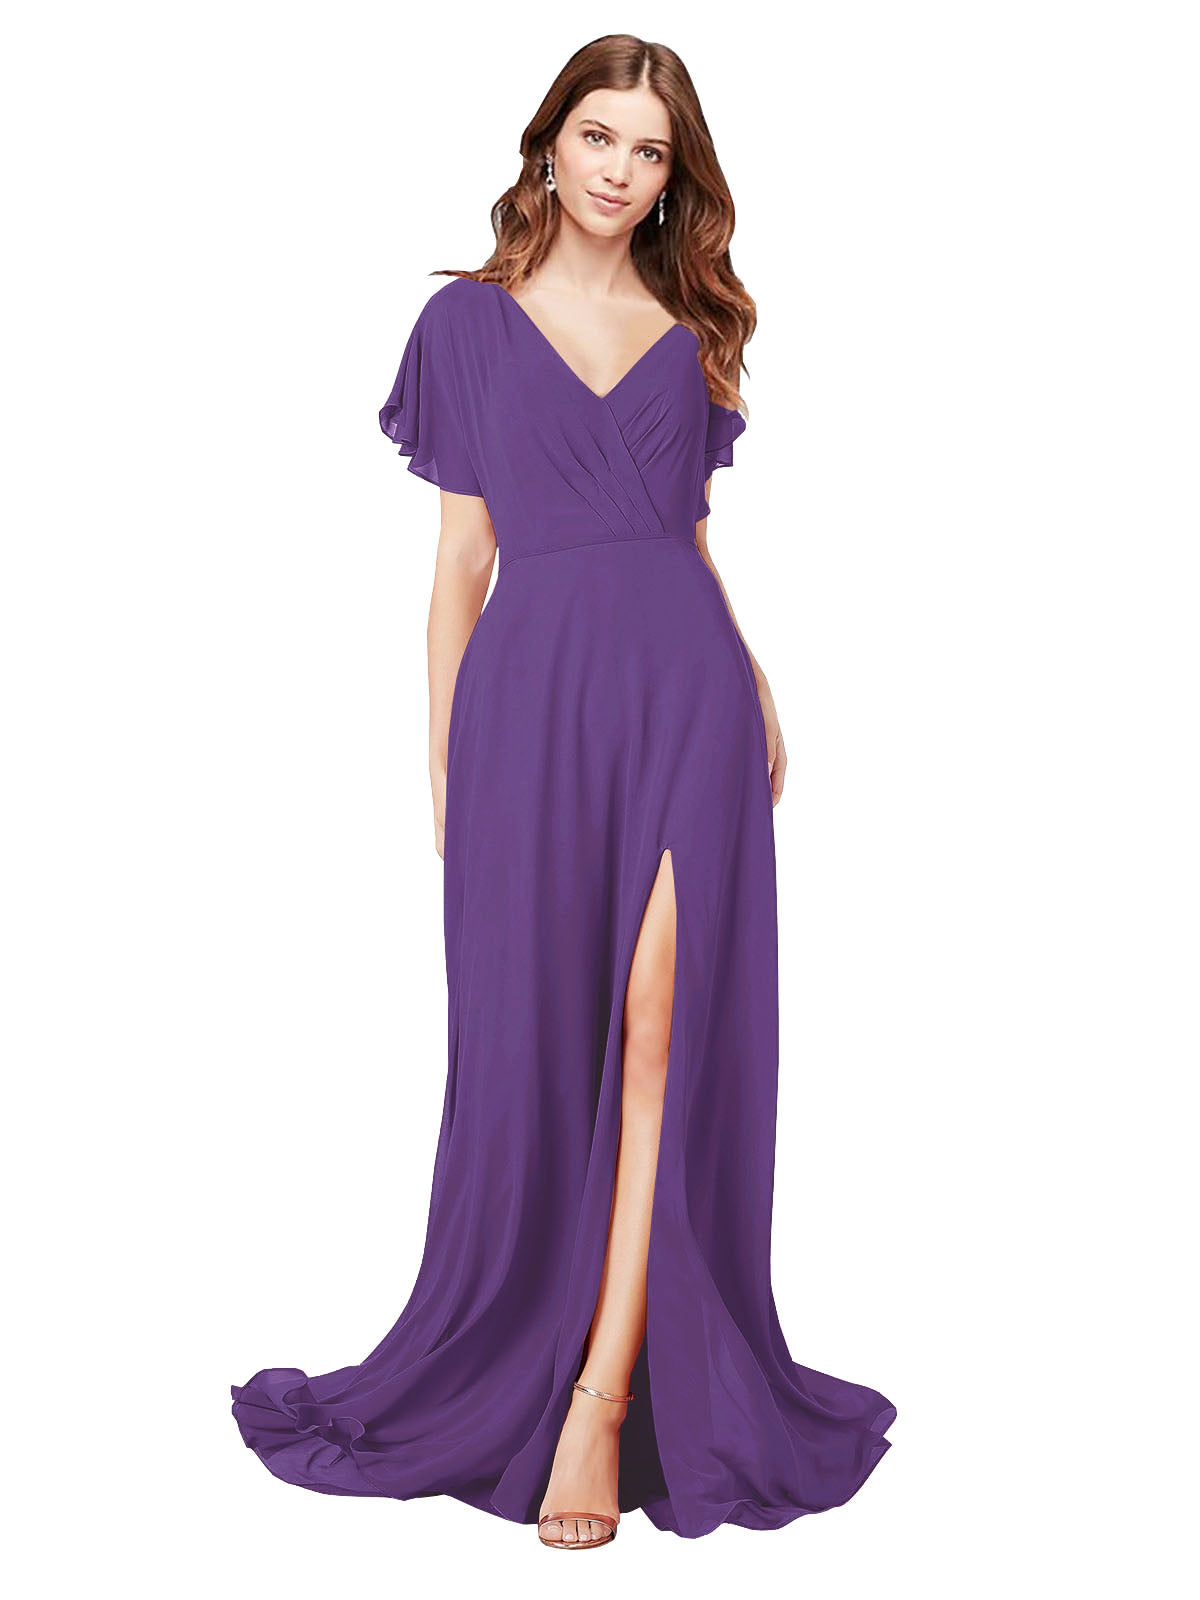 RightBrides Marisol Plum Purple A-Line V-Neck Cap Sleeves Long Bridesmaid Dress